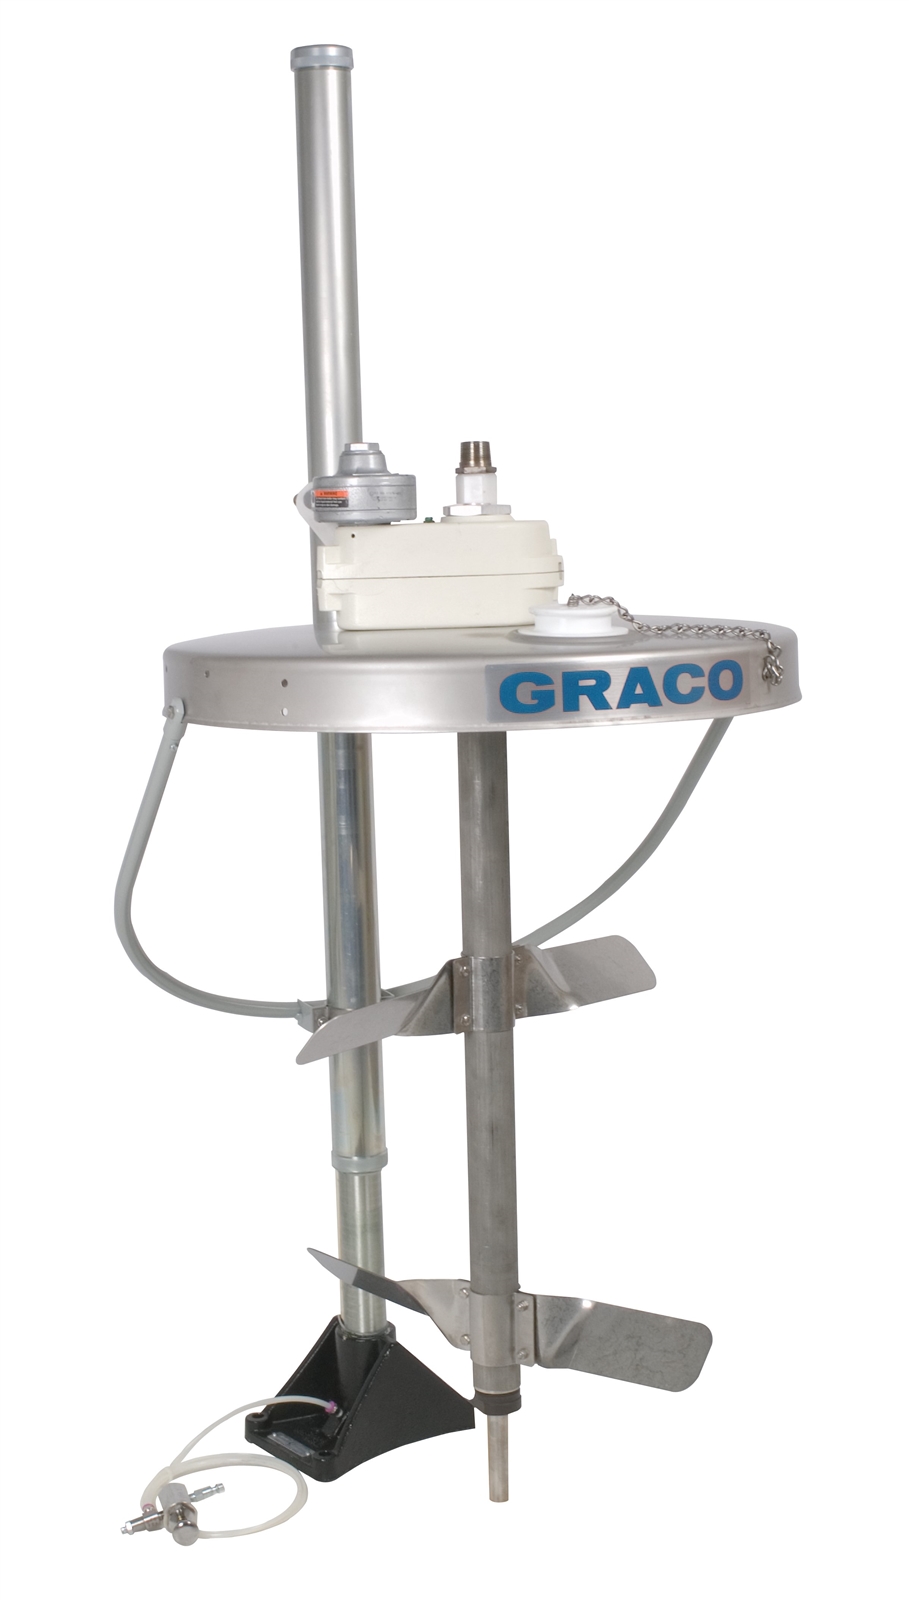 Graco 55 Gallon Pneumatic Lift Drum Cover & Agitator Package Paint Mixer 